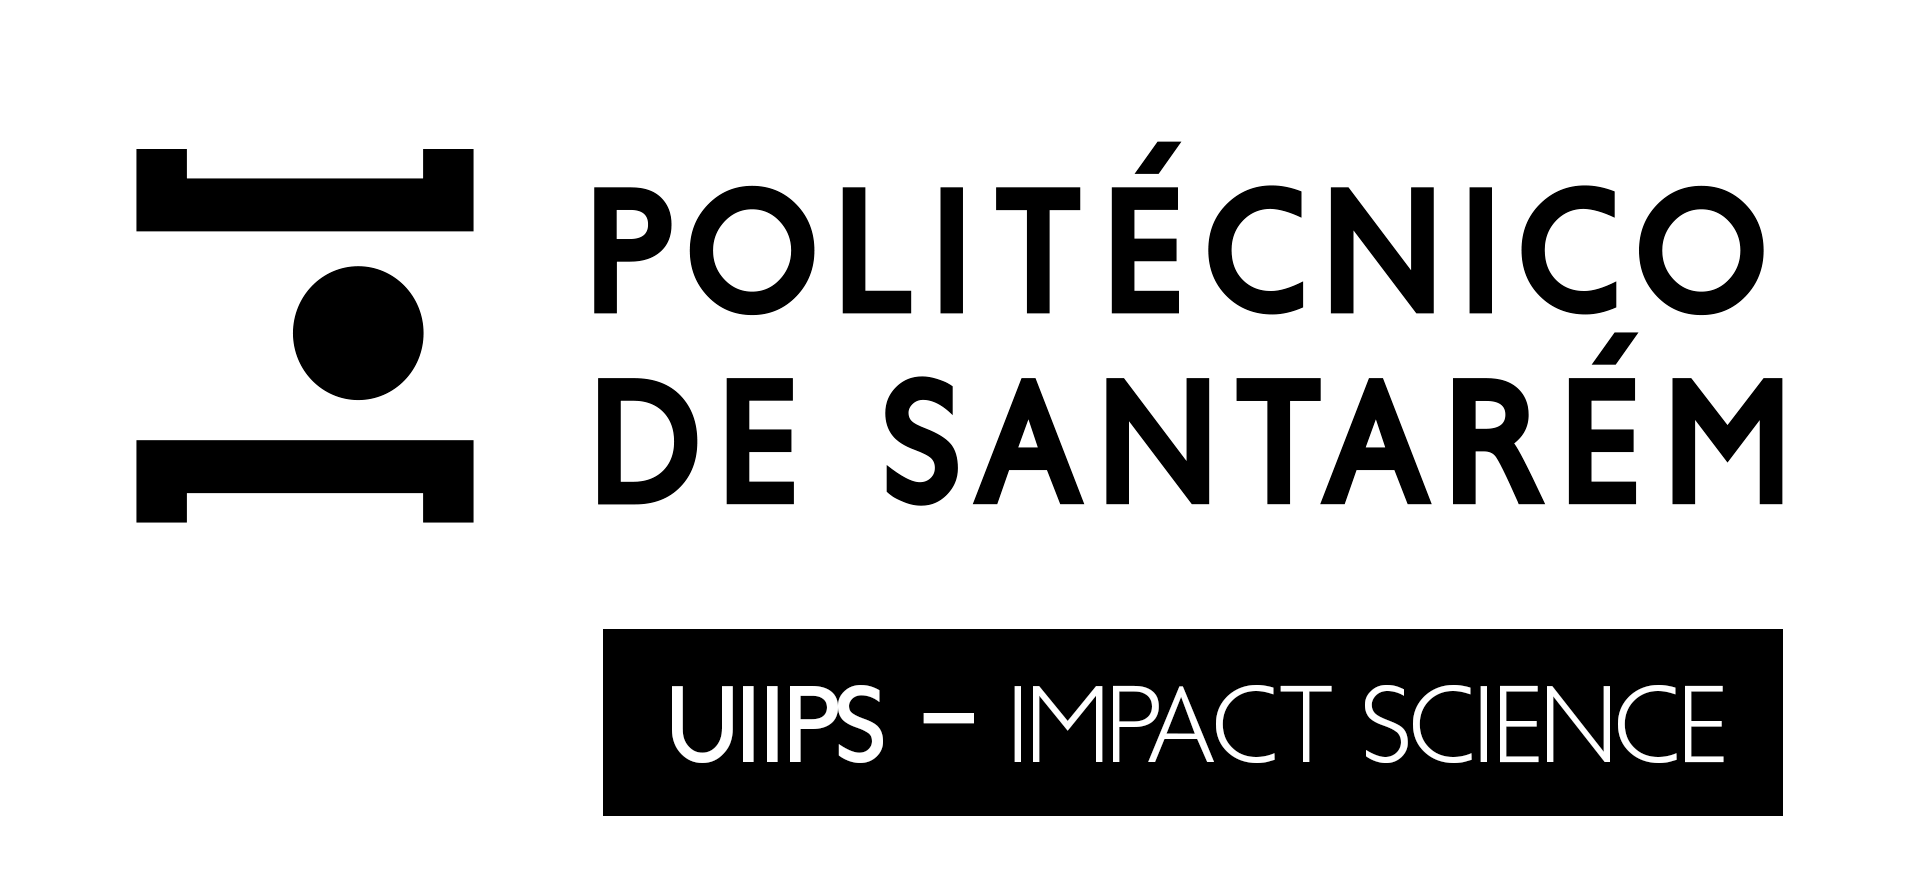 Revista UIIPS - Impact Science